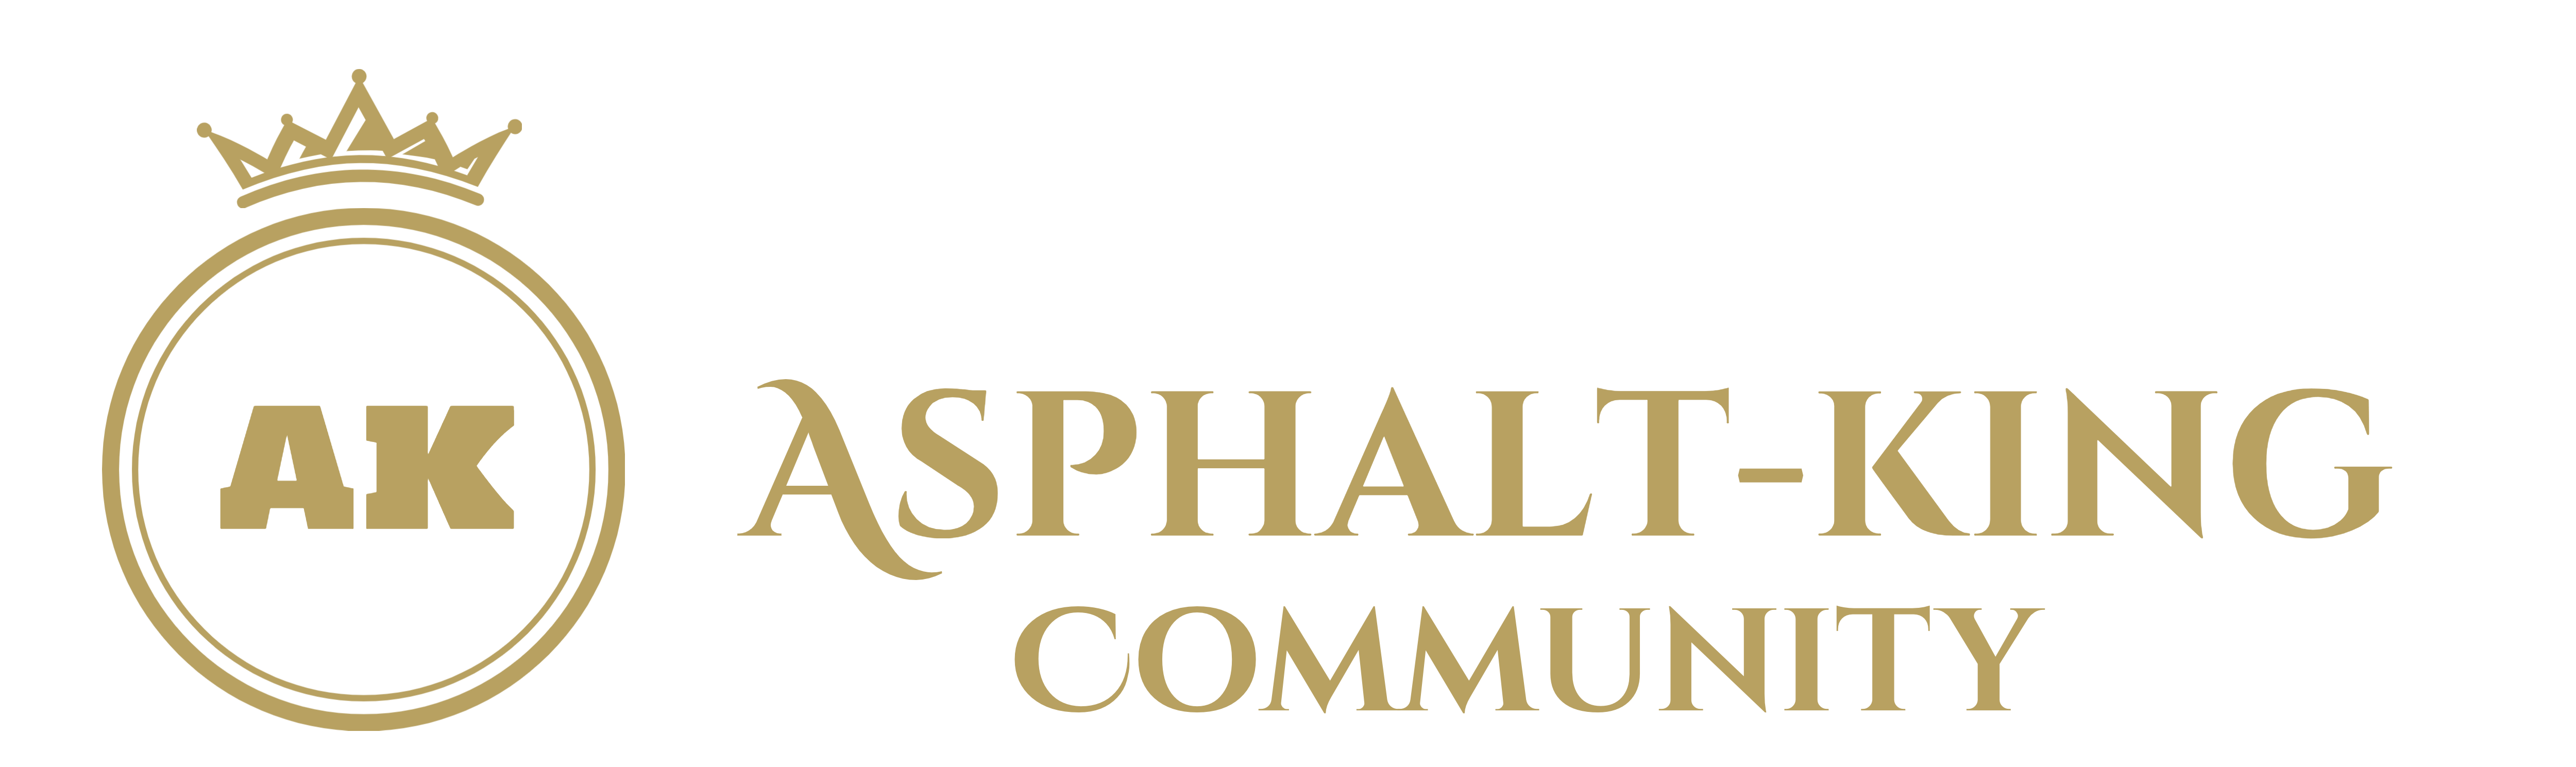 Asphalt-King Community